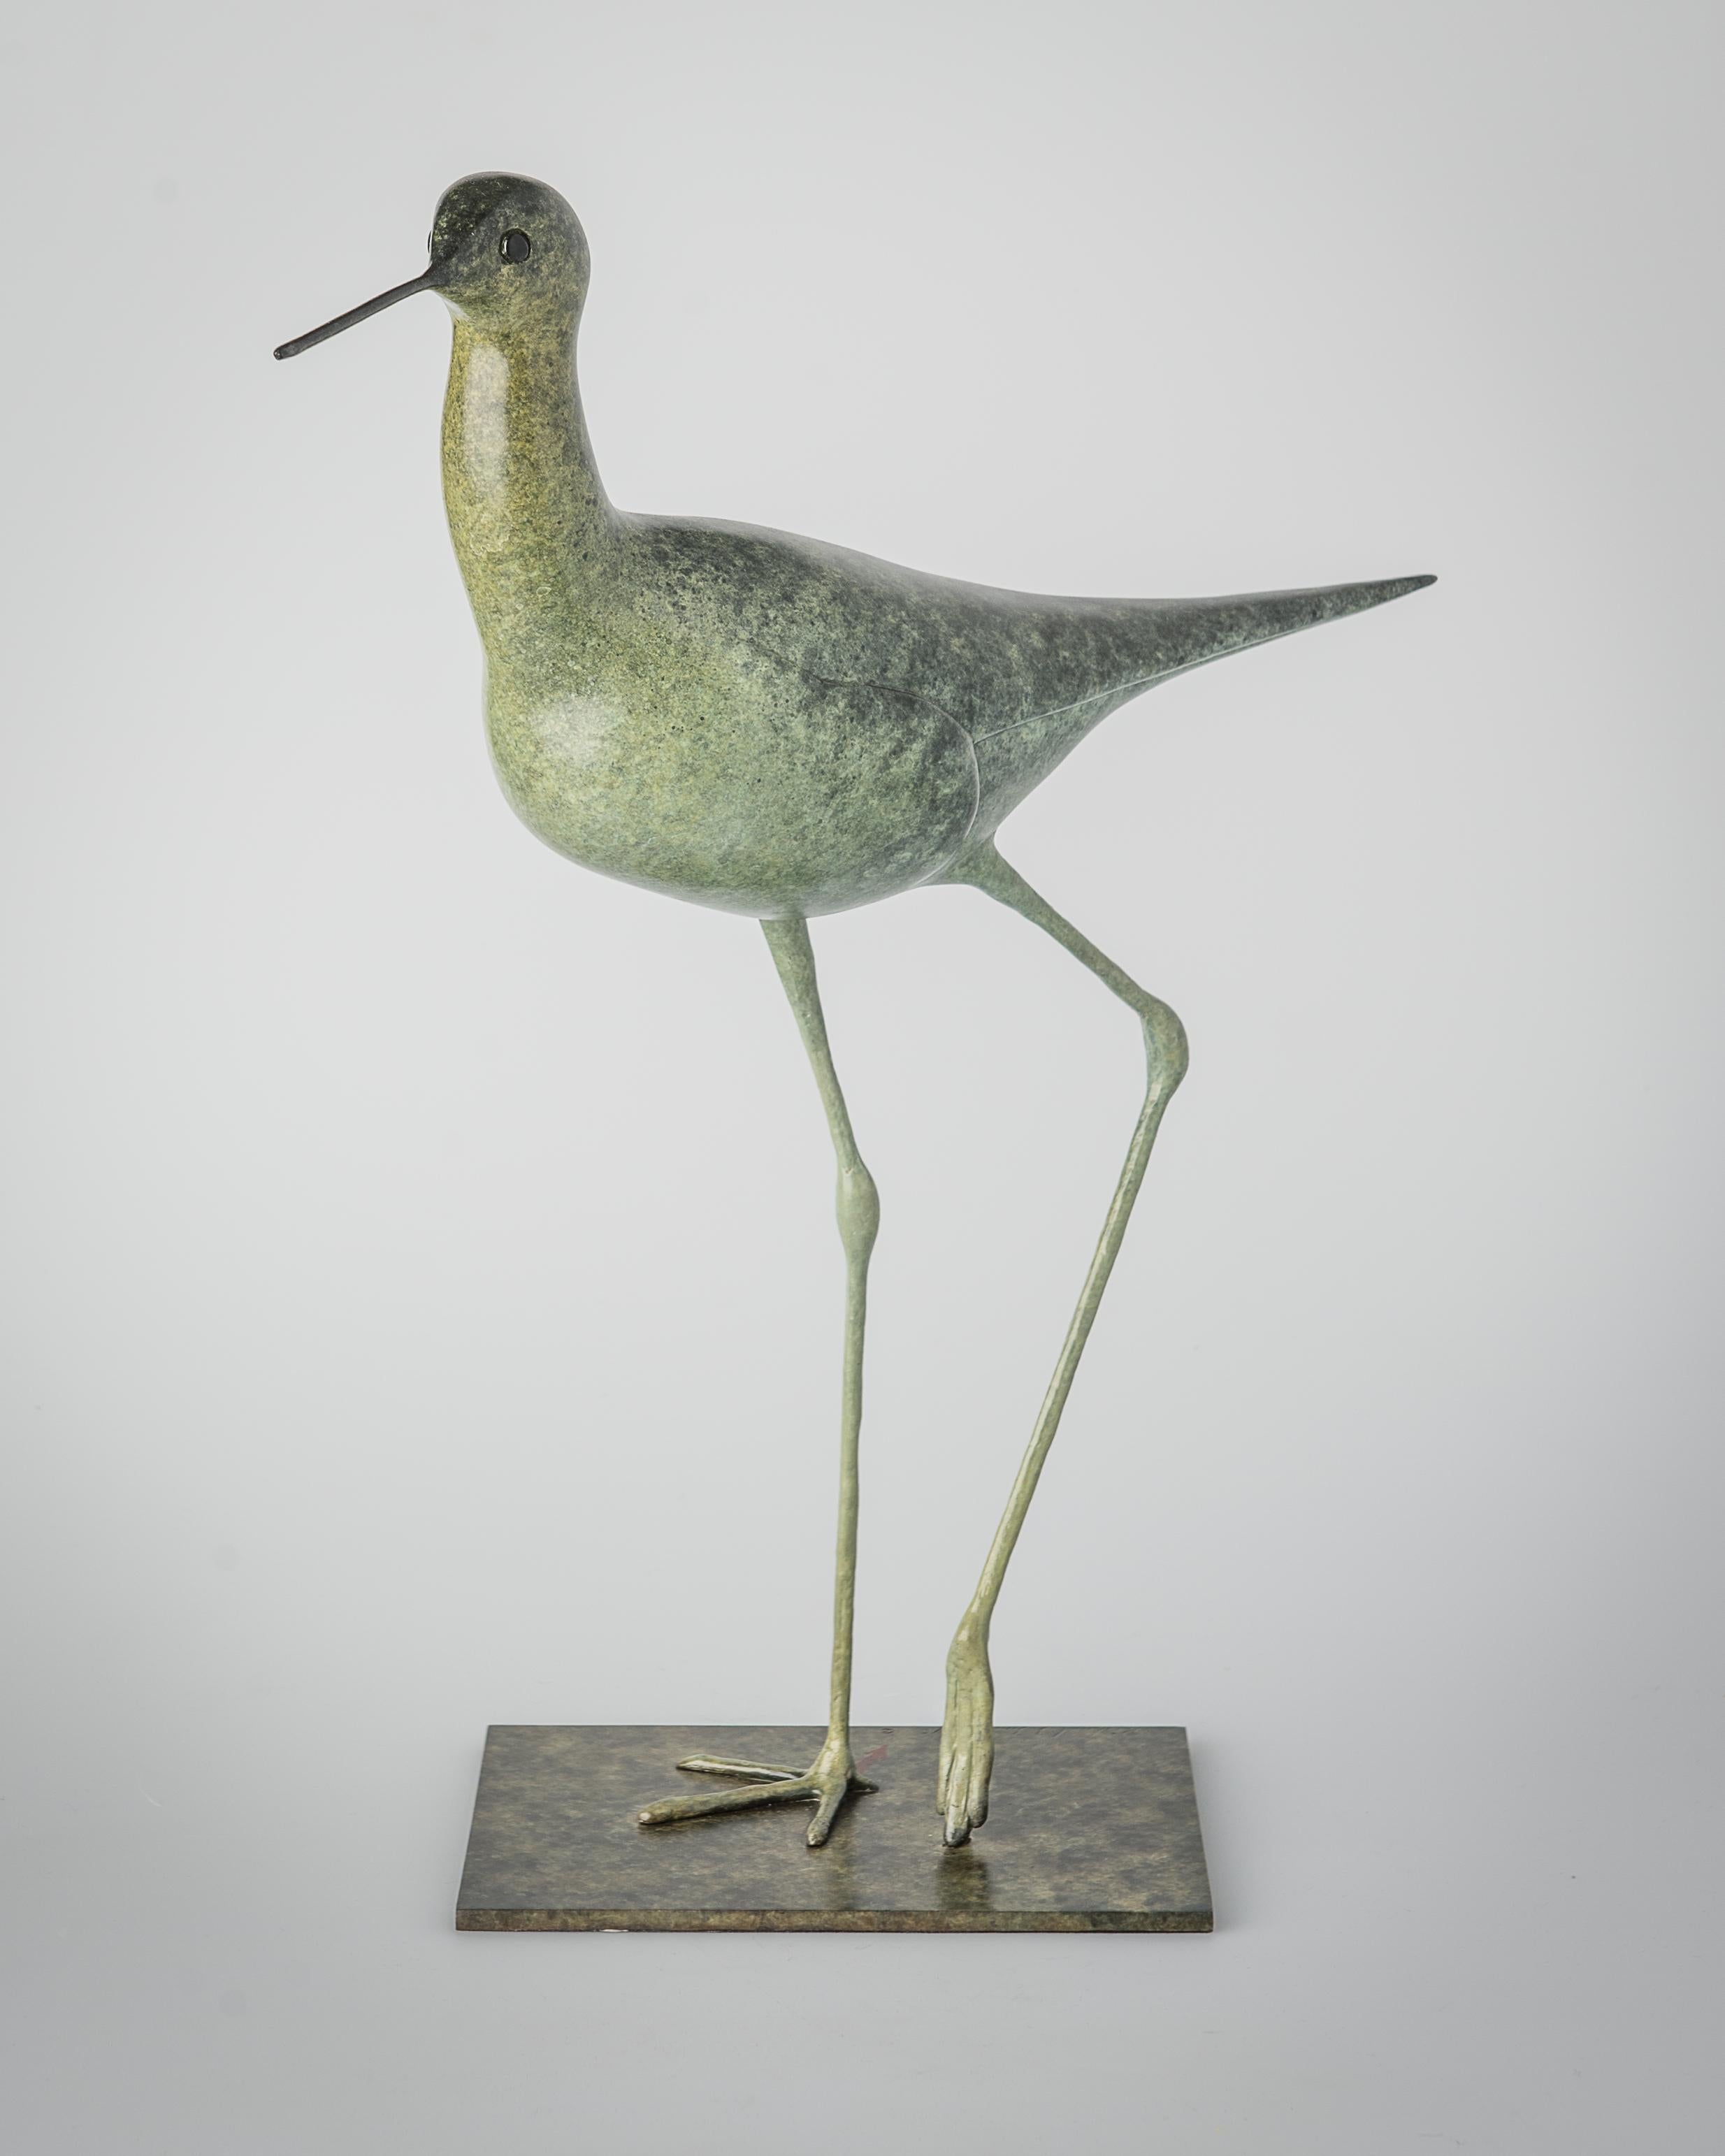 Richard Smith b.1955 Figurative Sculpture - Contemporary Wildlife Bronze Patinated Green Sculpture 'Stilt' by Richard Smith 